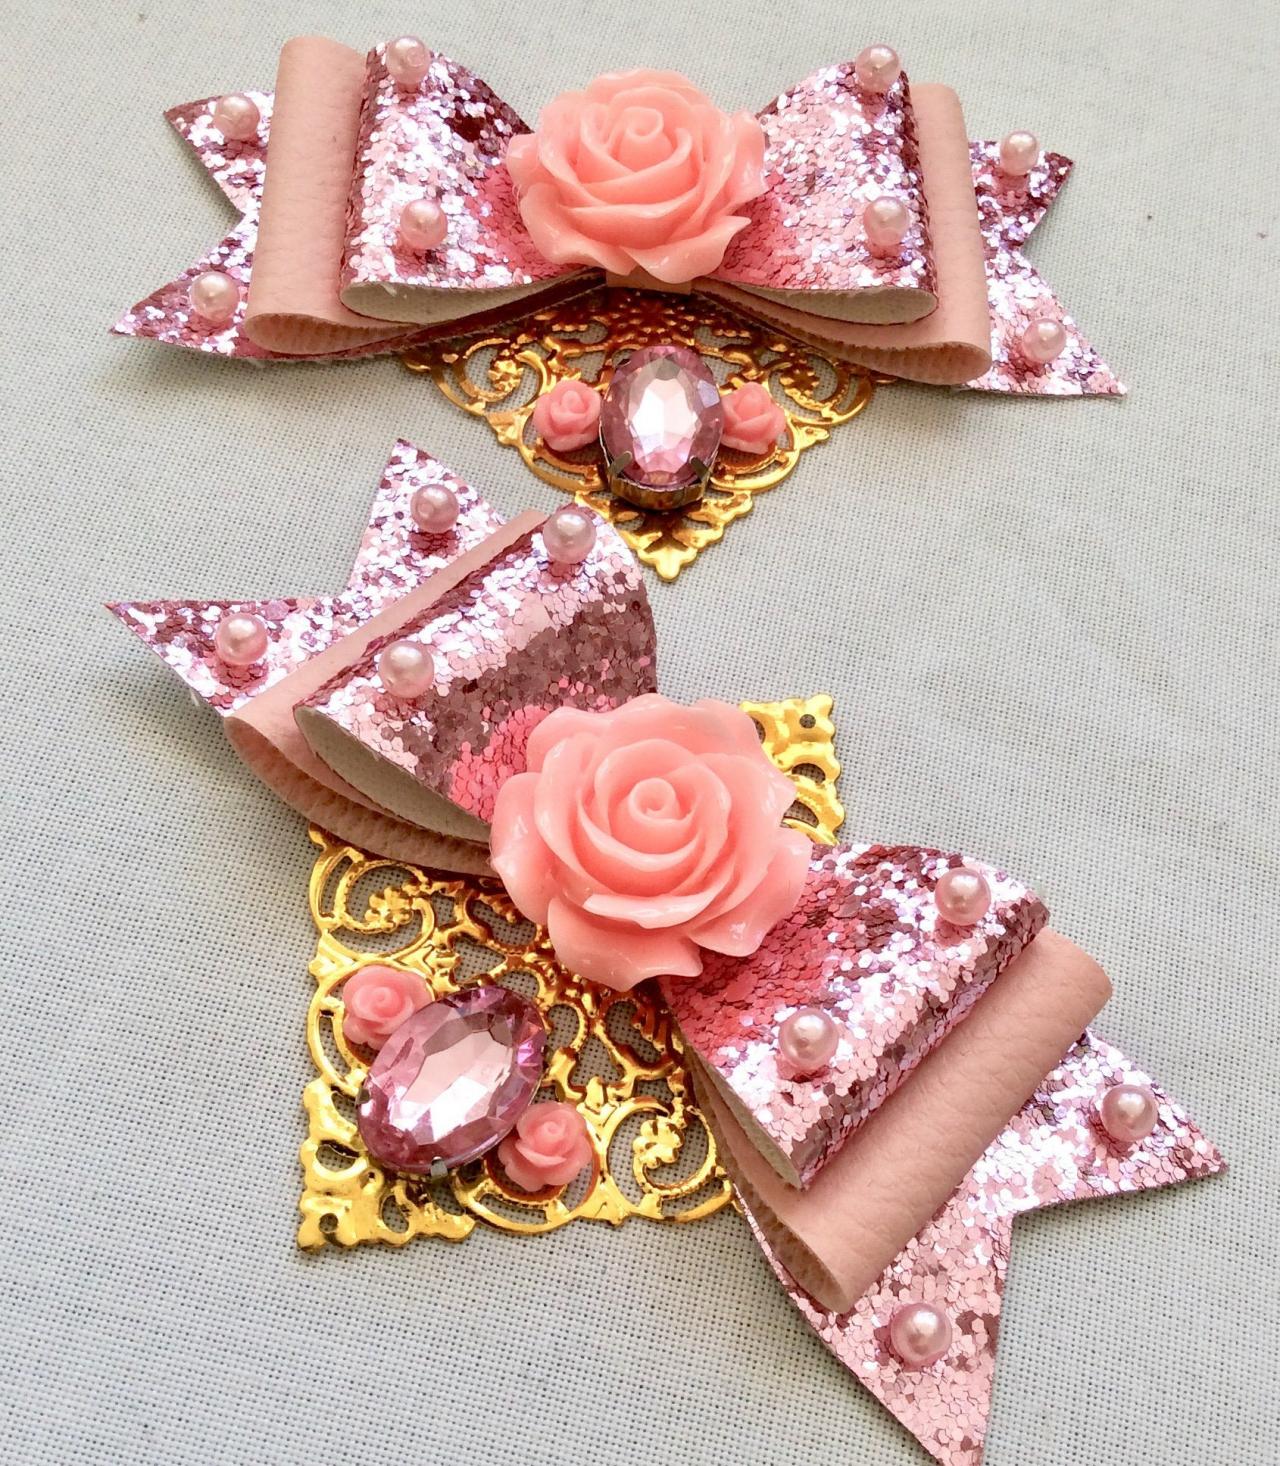 Beautiful Classic Lolita hair bow roses print pearls cameo cabochon resin vintage rockabilly kawaii wedding pink gold glitter brooch pin